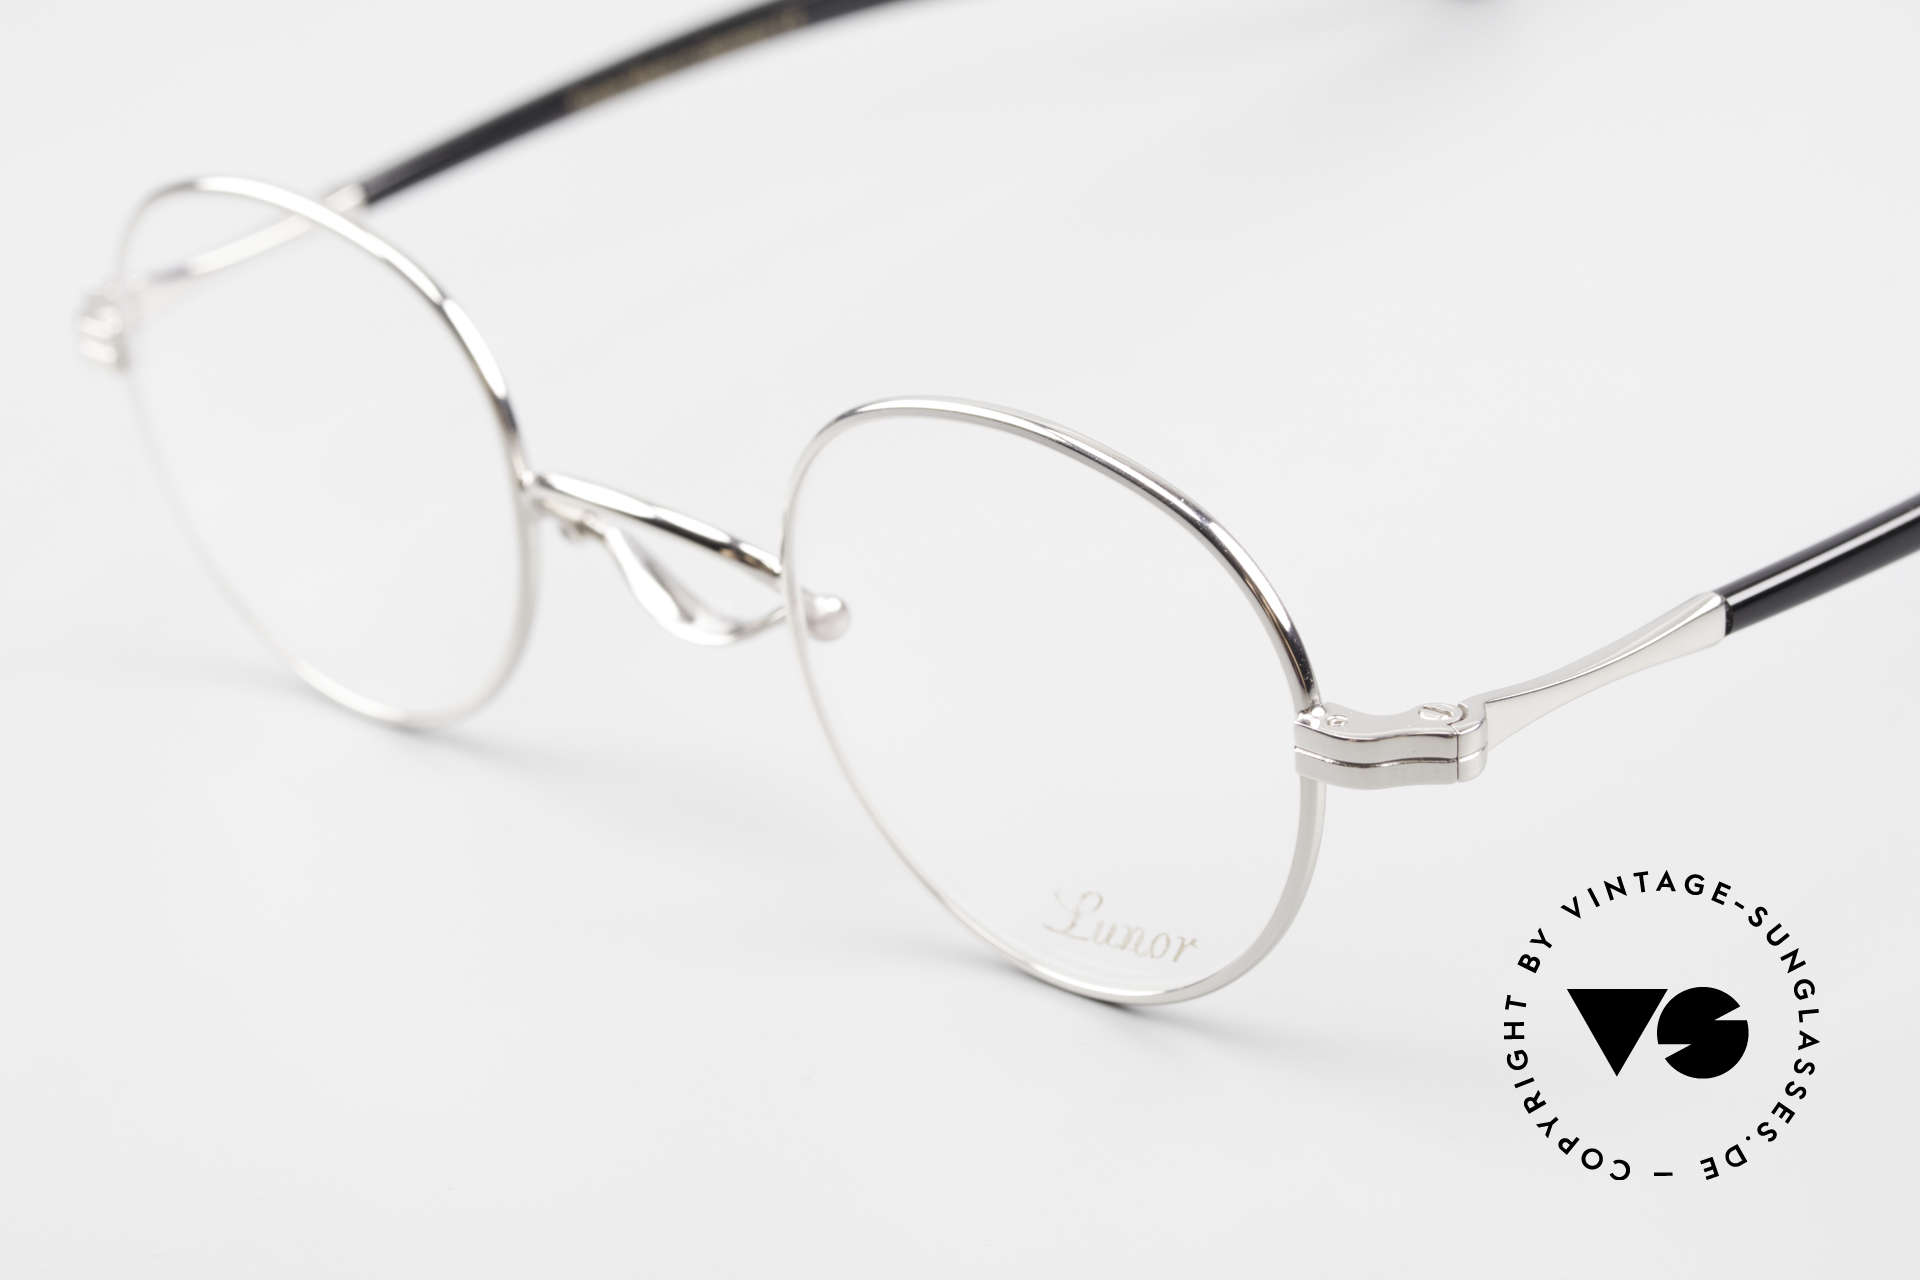 Lunor Swing A 32 Panto Swing Bridge Glasses Platinum, unworn NOS (like all our rare vintage Lunor classics), Made for Men and Women